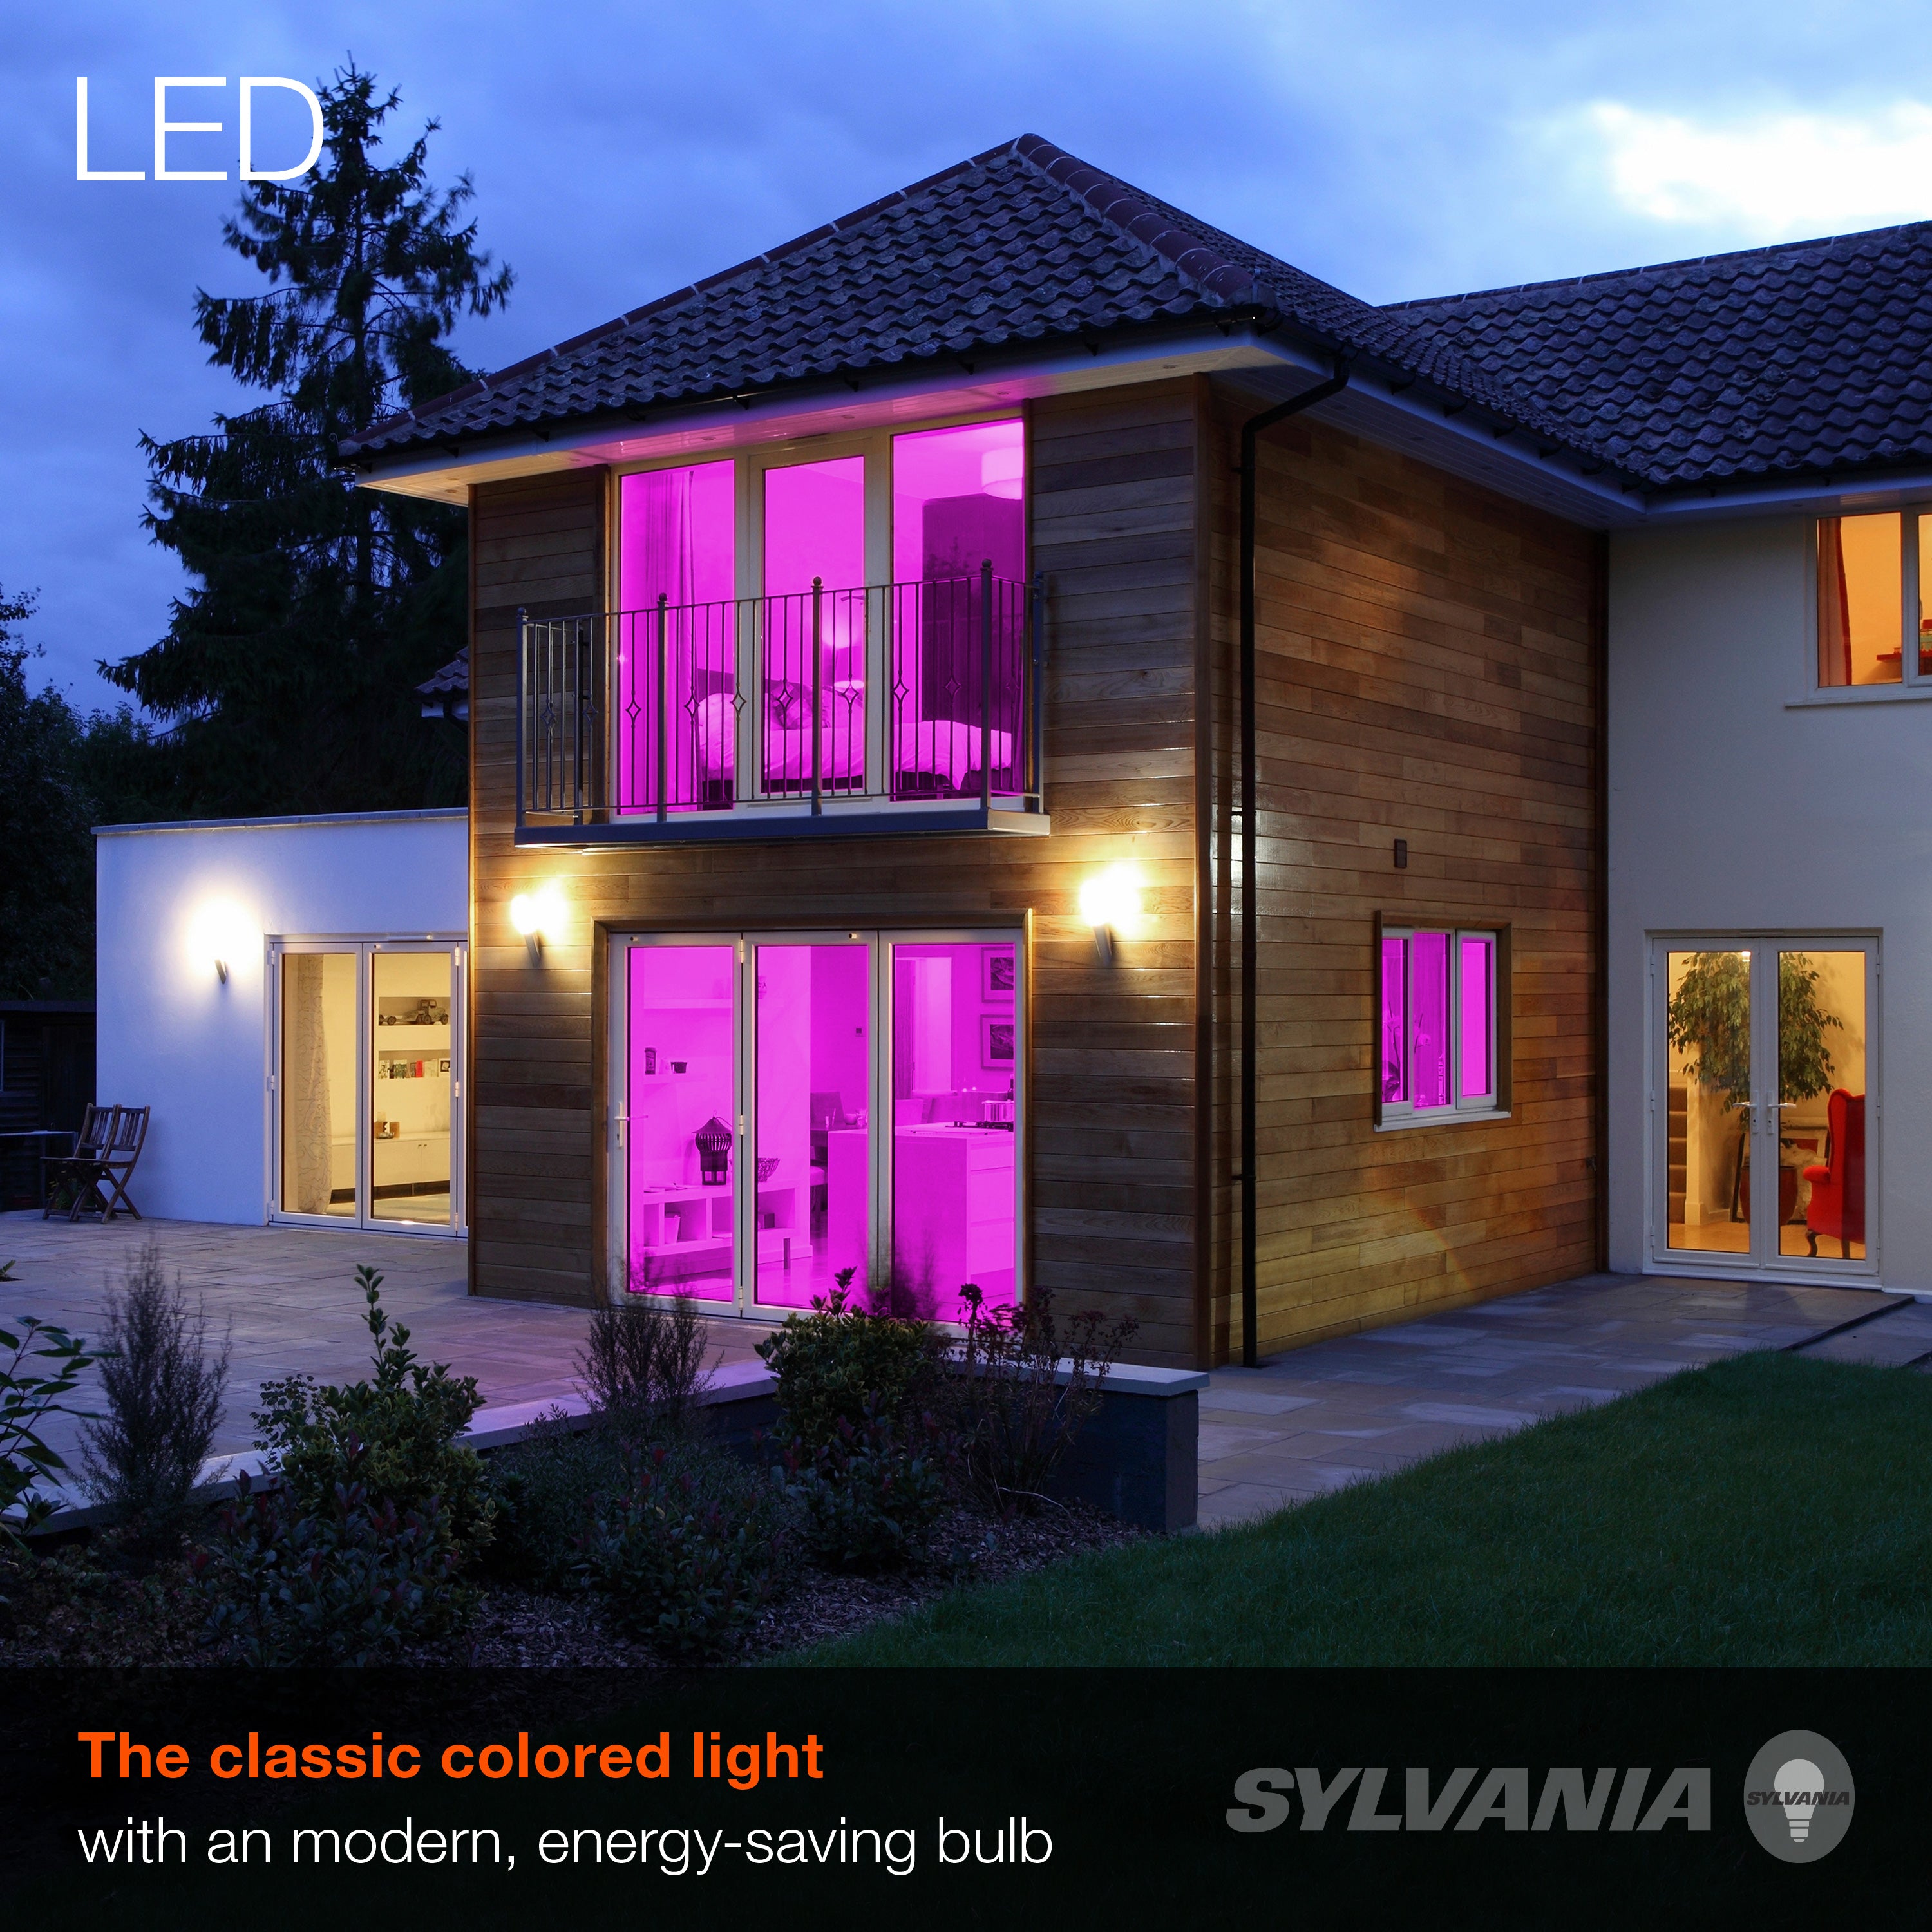 SYLVANIA LED Purple Glass Filament A19 Light Bulb,  40W = 4.5W, Dimmable, E26 Medium Base - 6 Pk